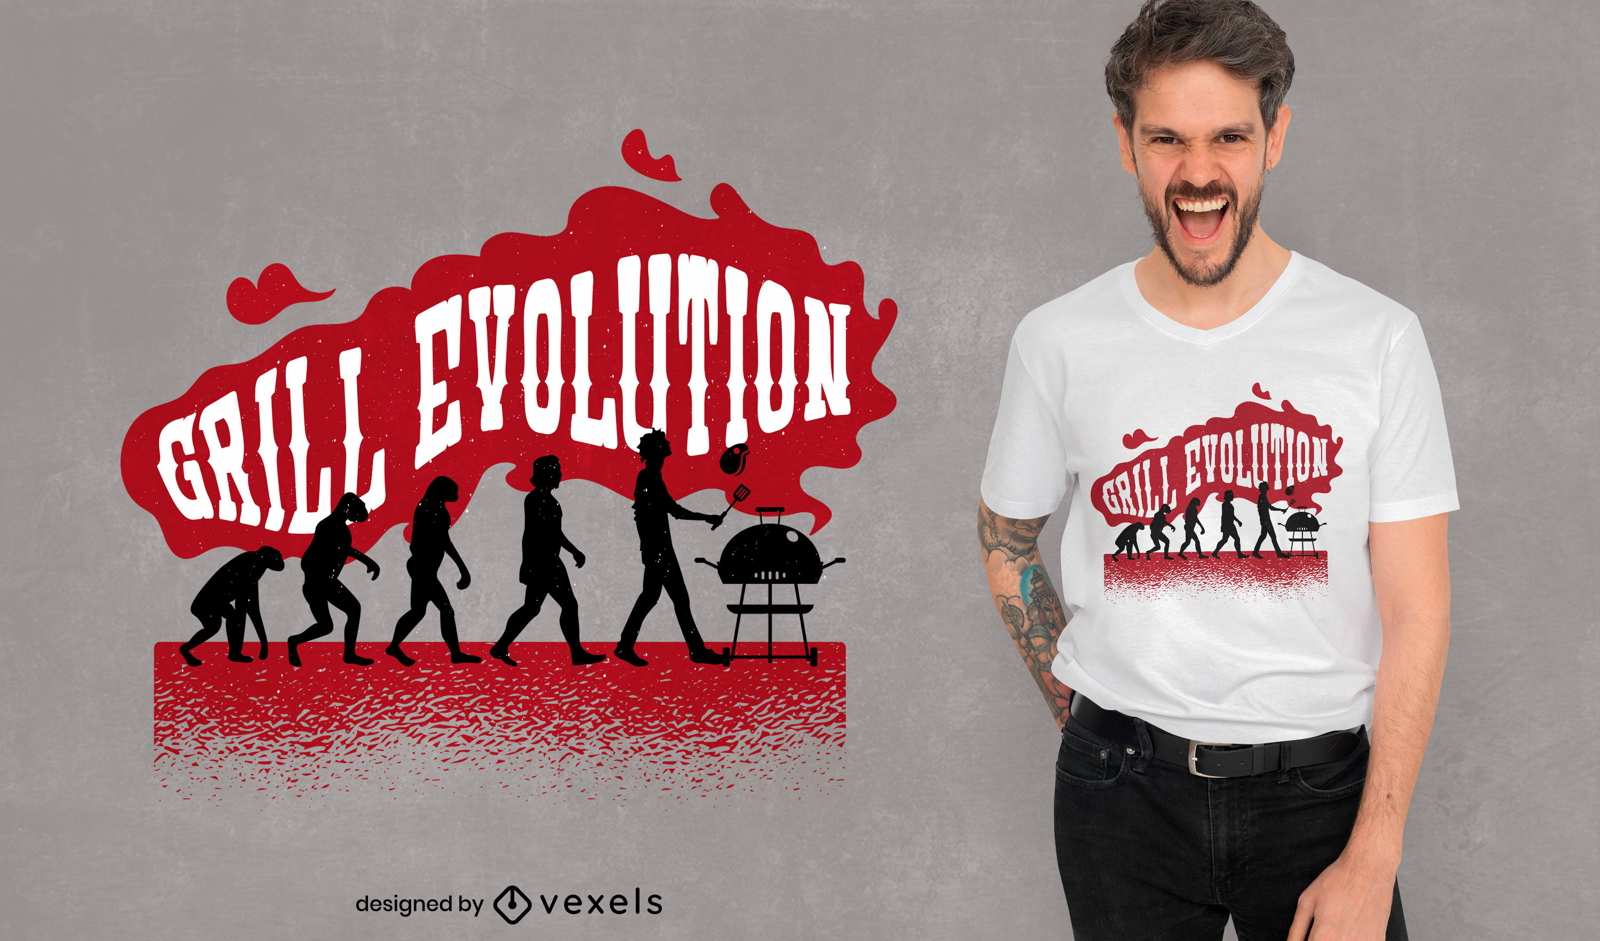 Grill evolution t-shirt design